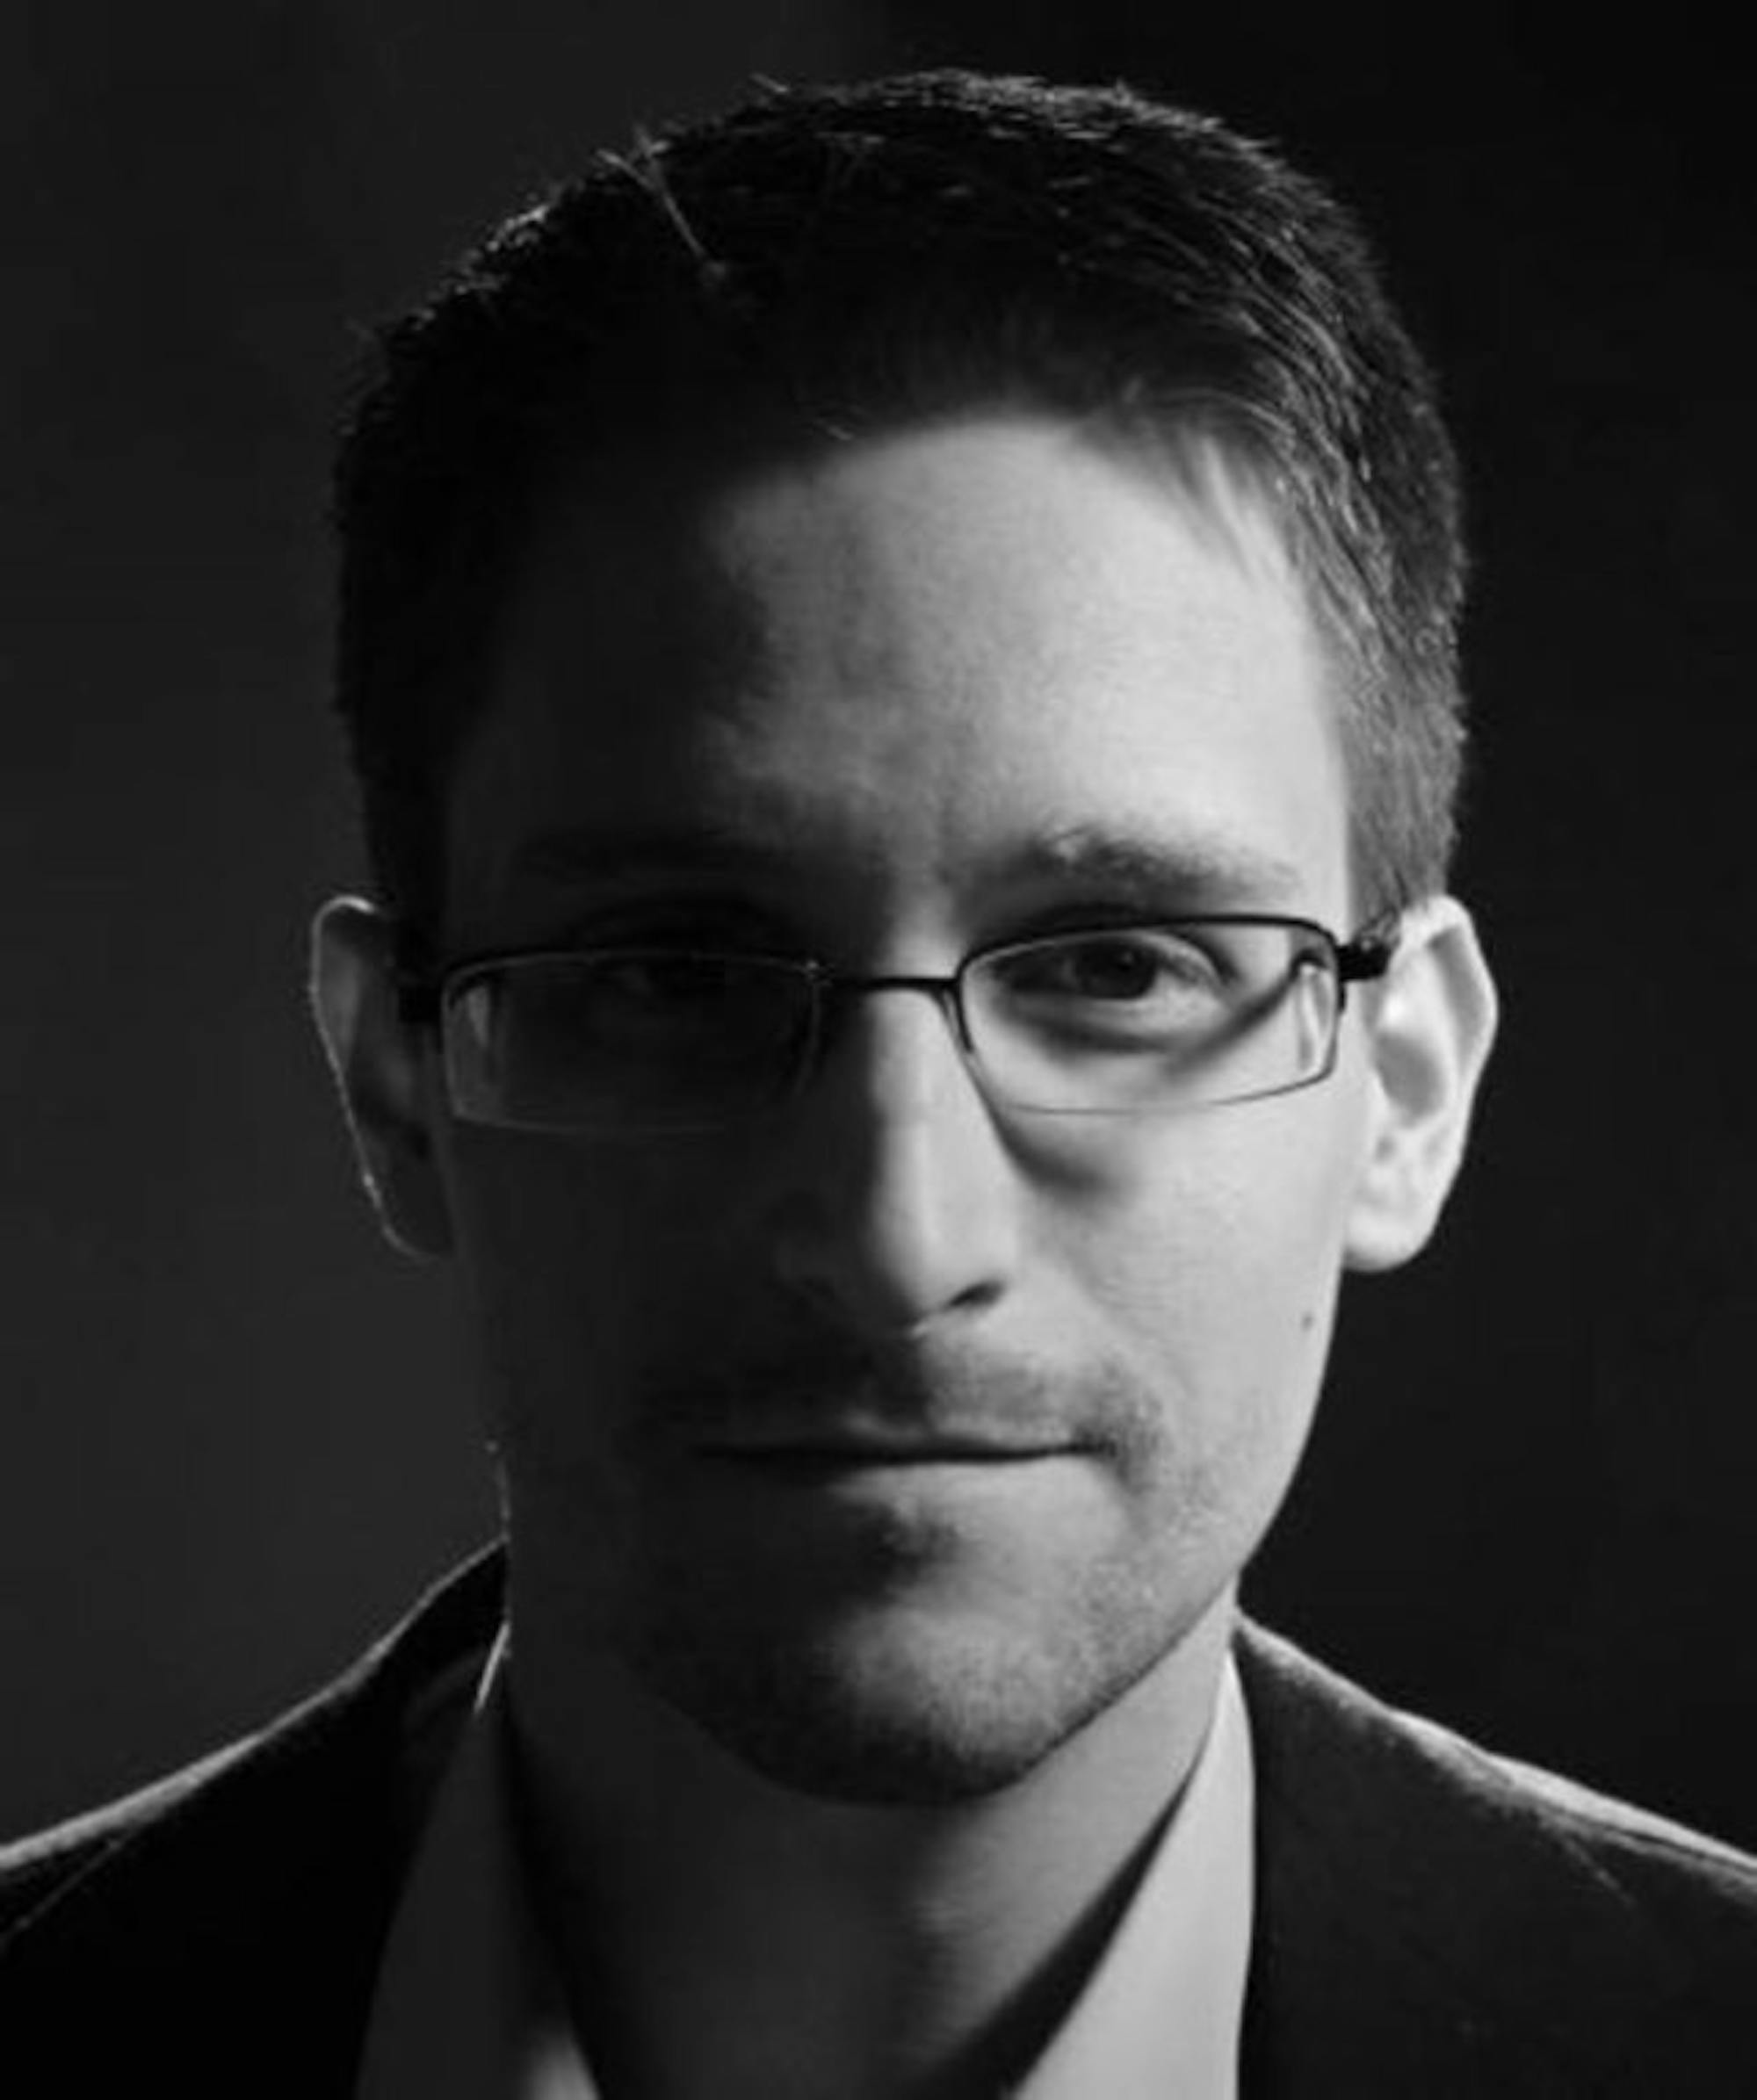 640px-Edward-Snowden-FOPF-2014